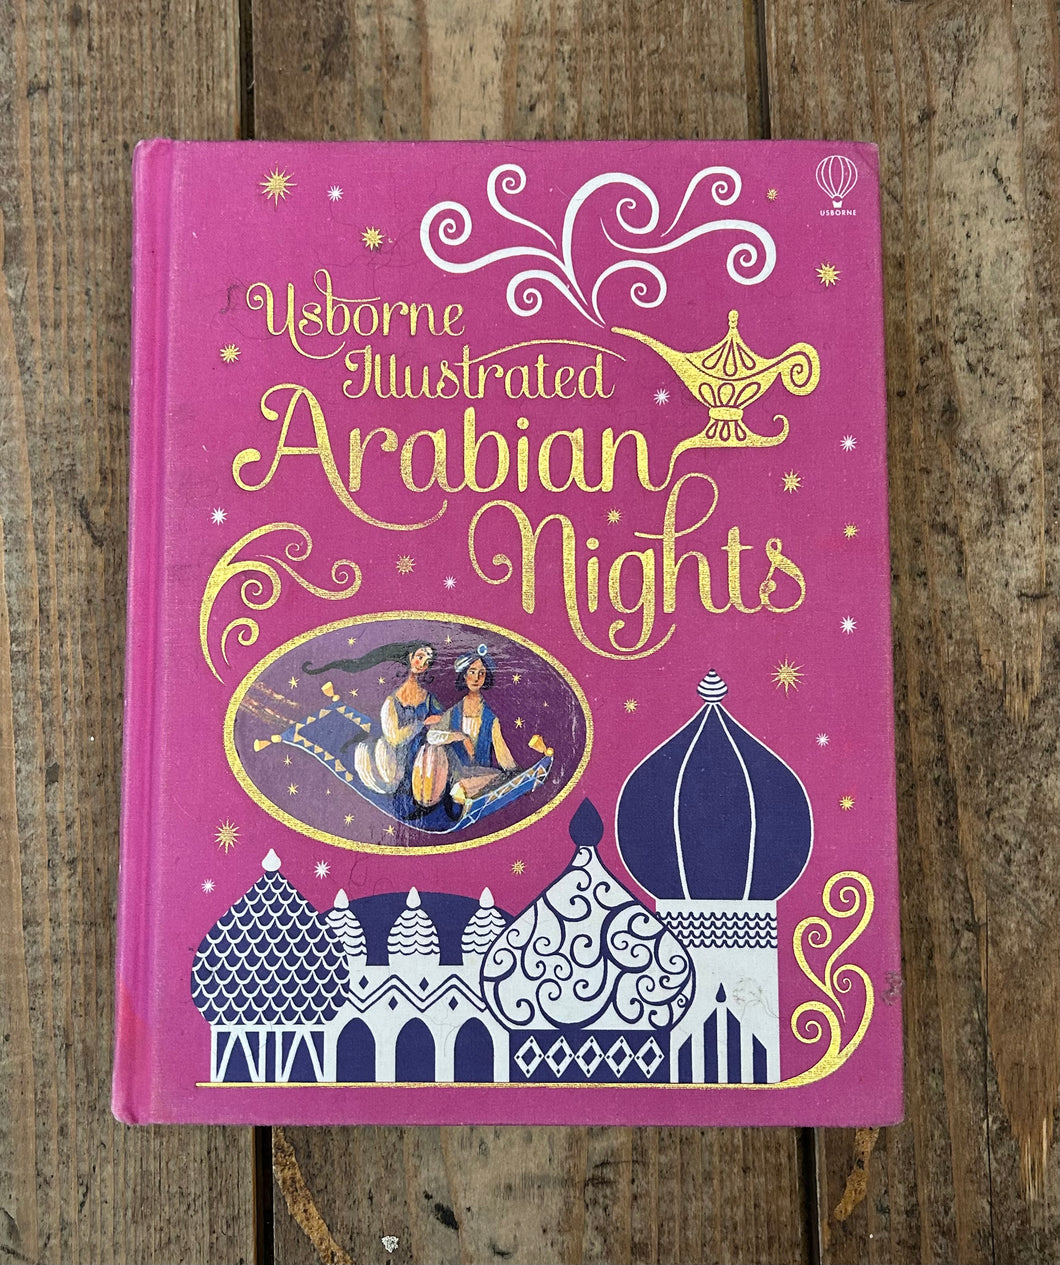 Arabian nights stories